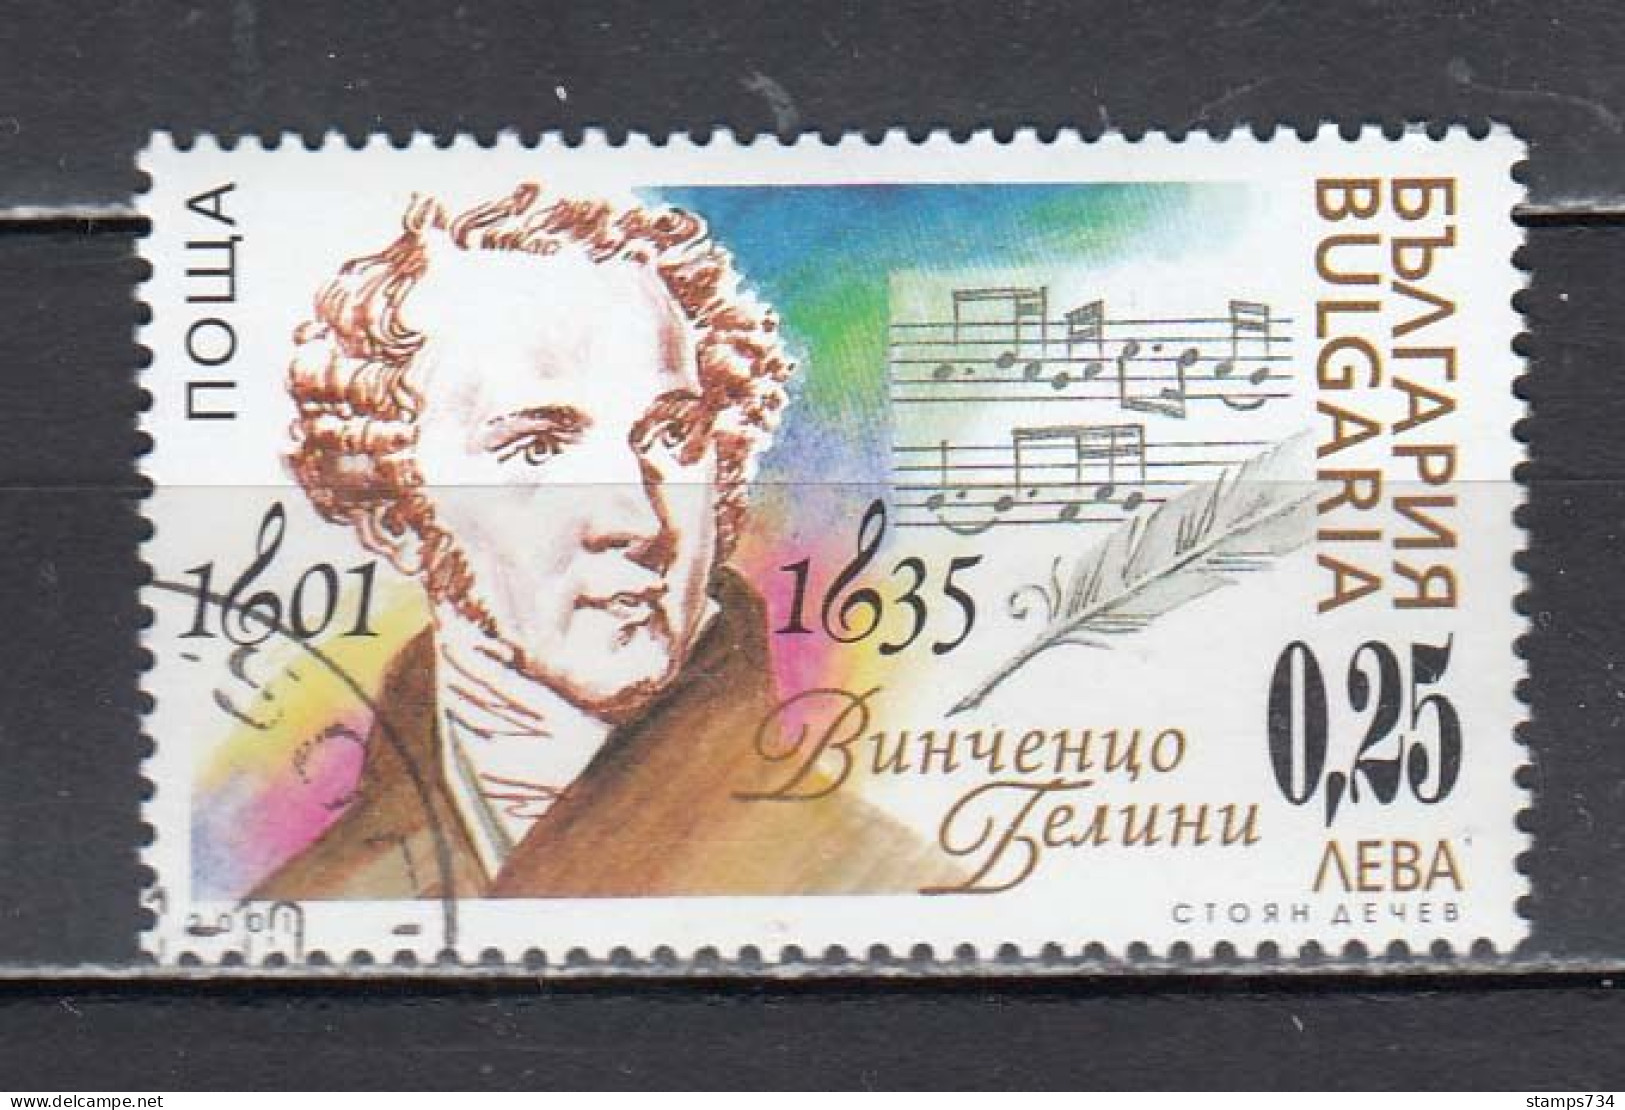 Bulgaria 2001 - 200th Birthday Of Vincenzo Bellini, Italian Composer, Mi-Nr. 4538, Used - Usati